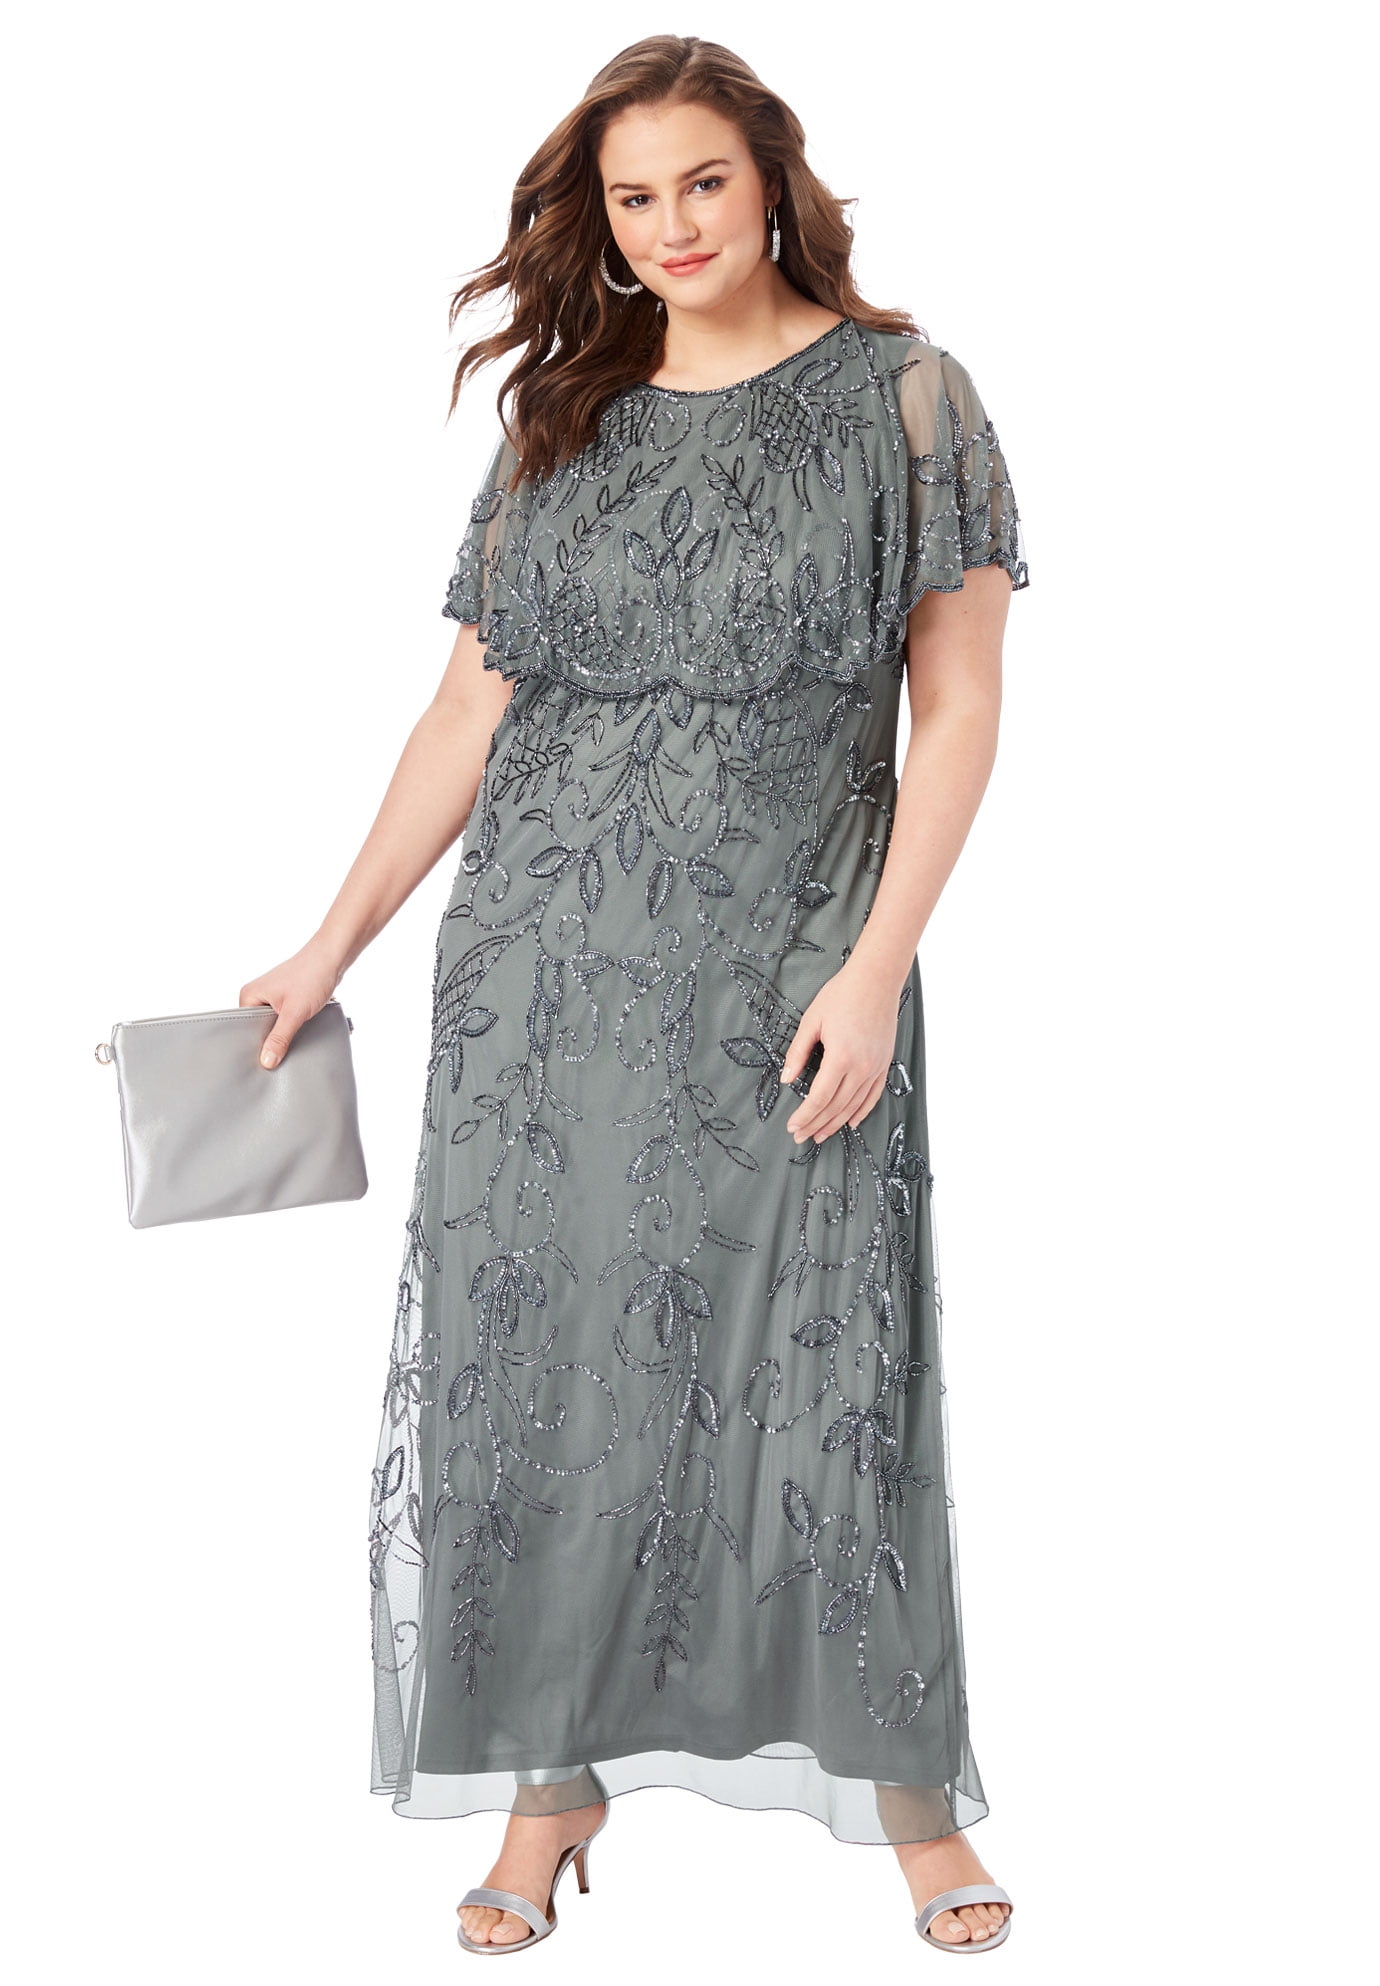 Roaman's Women's Plus Size Glam Maxi Dress Formal Evening Capelet Gown Walmart.com